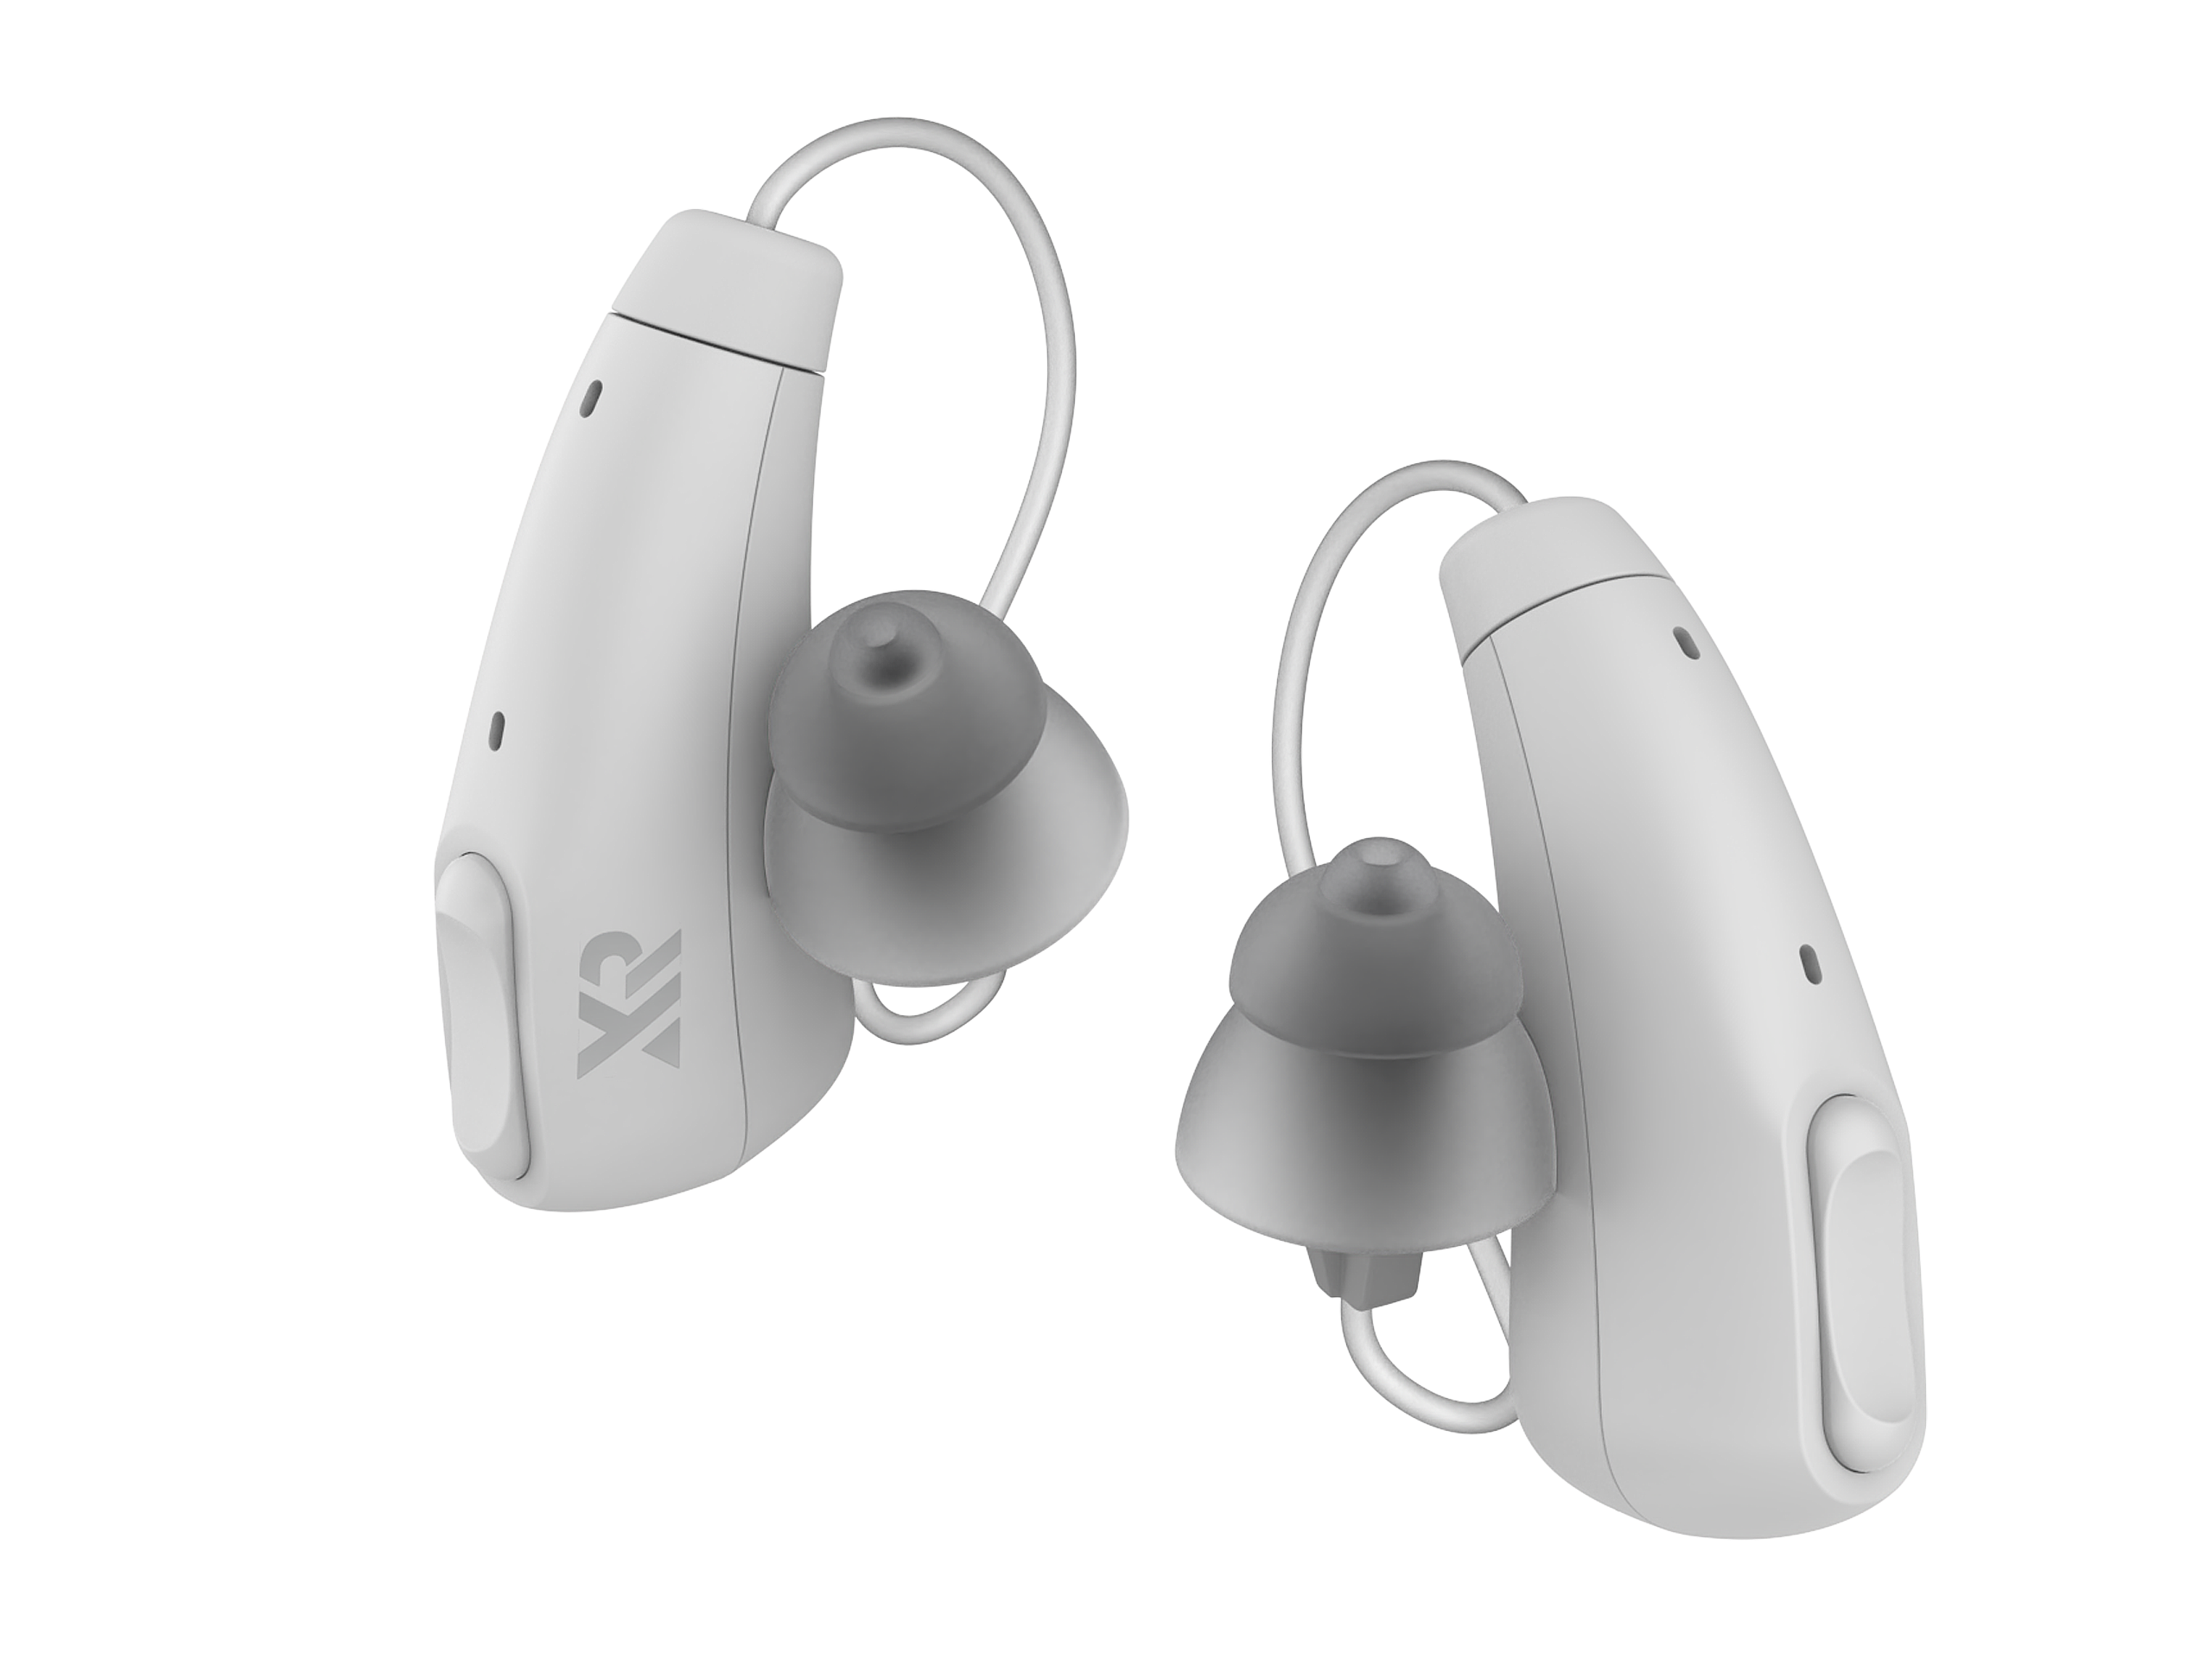 HEAR 2 Pro
Smart WirelessOTC Hearing Aid
